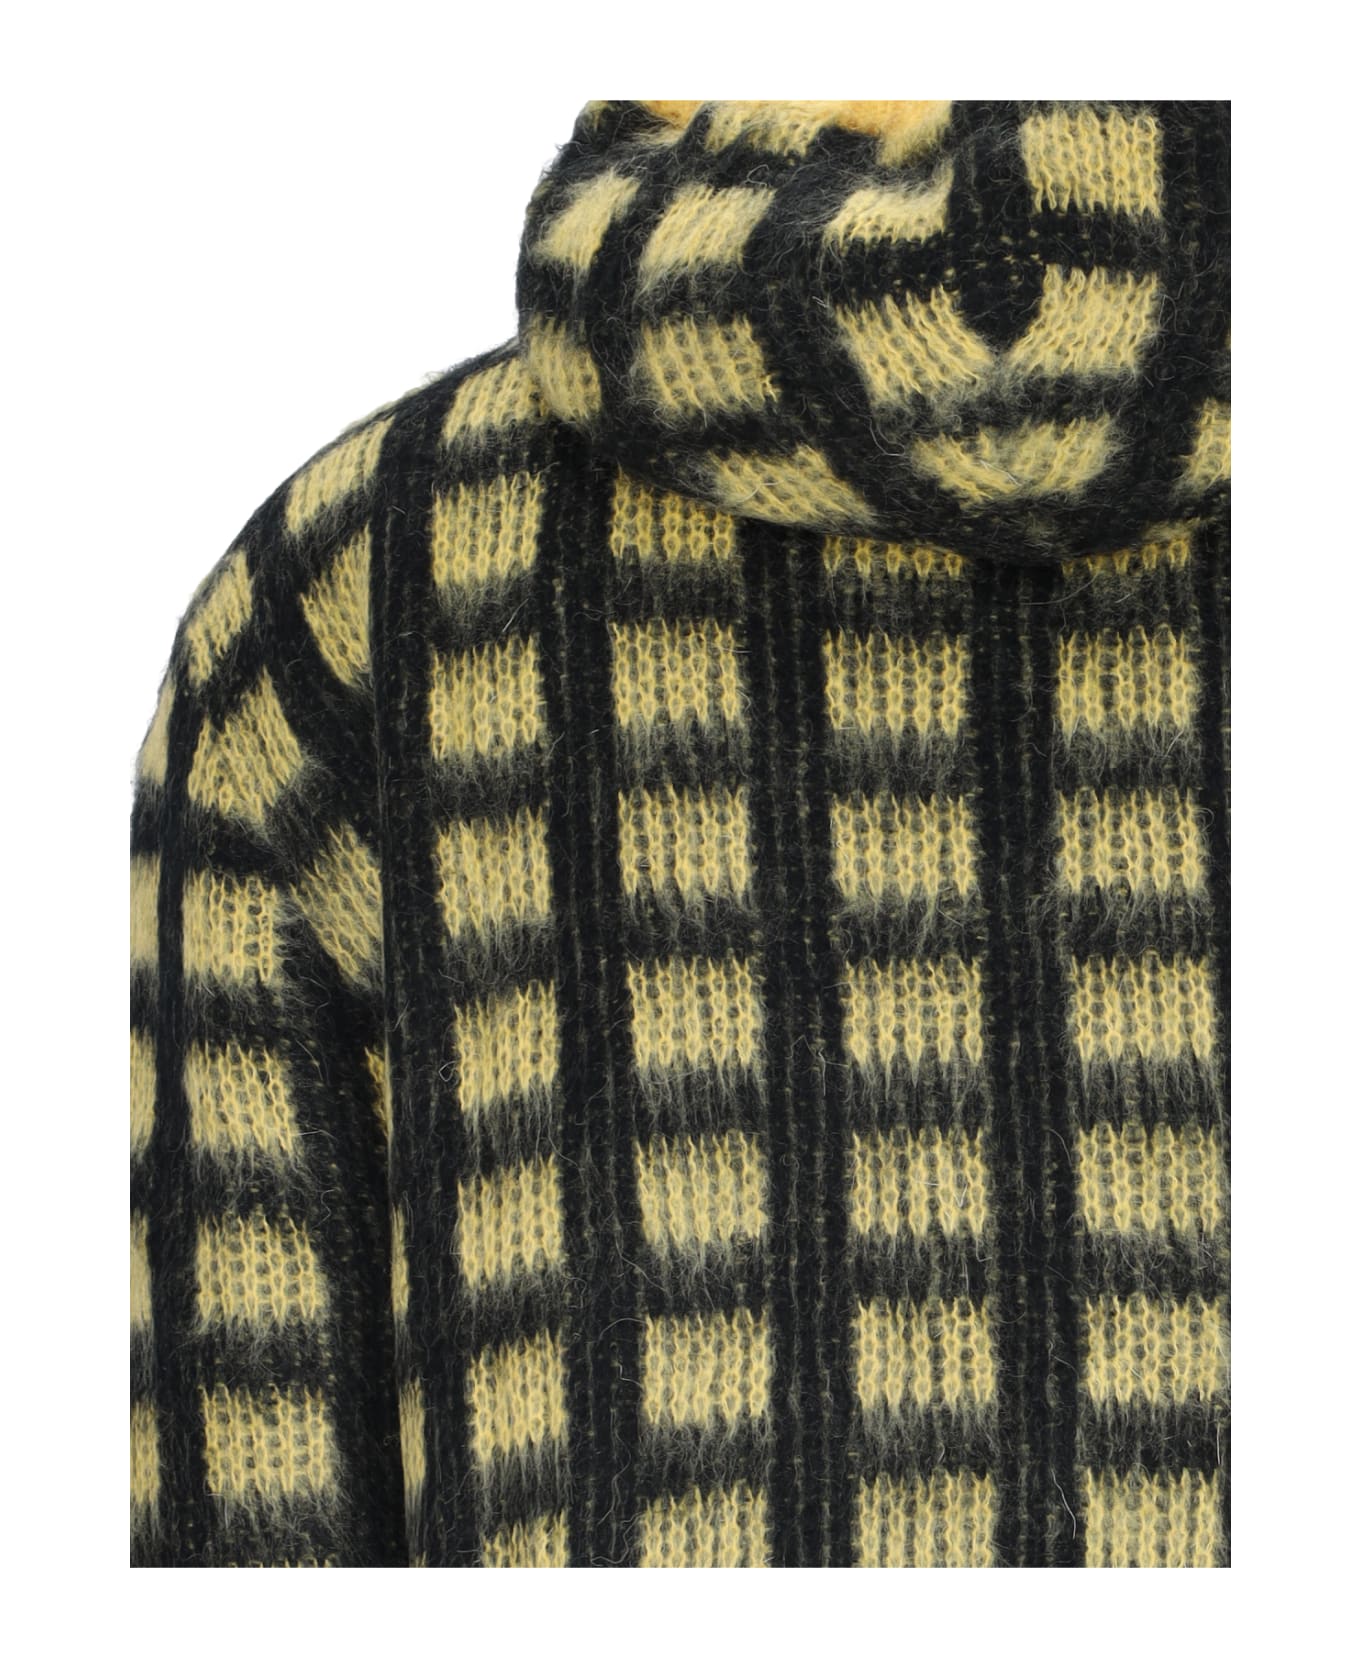 Marni 'check' Cardigan Sweatshirt - MultiColour